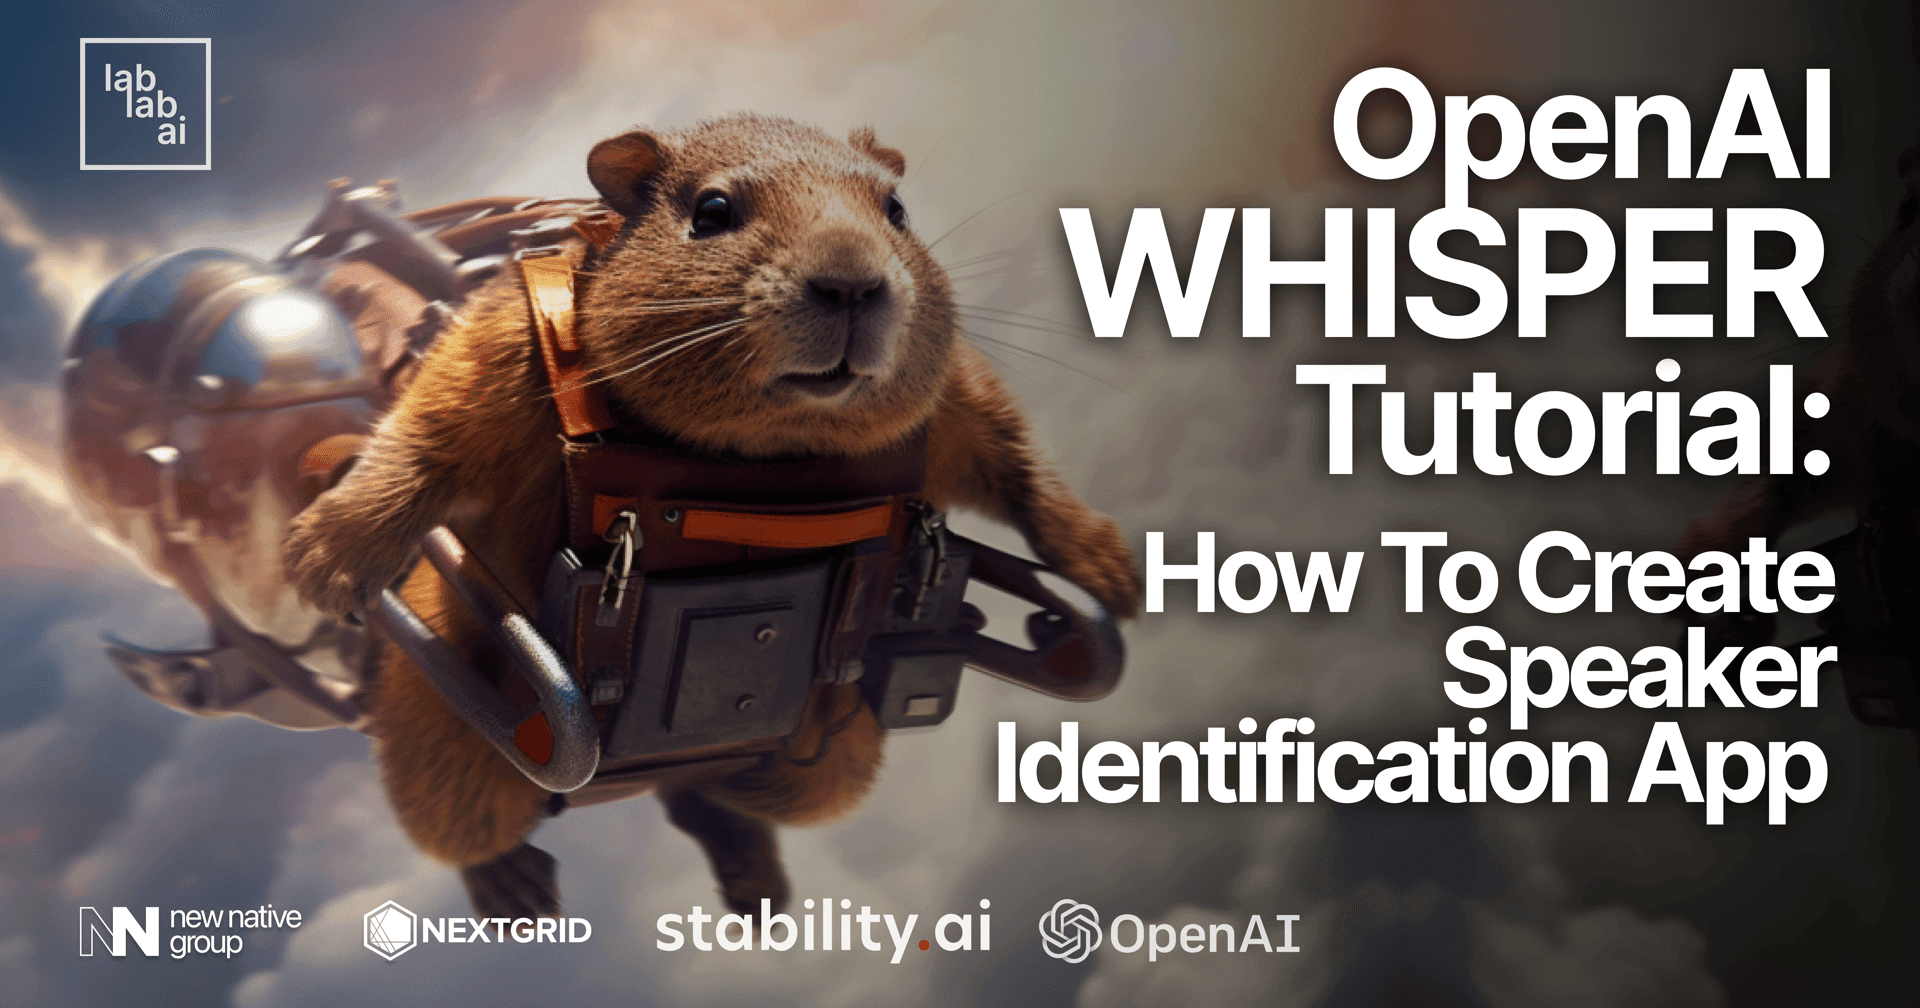 OpenAI Whisper tutorial: how to create speaker identification app